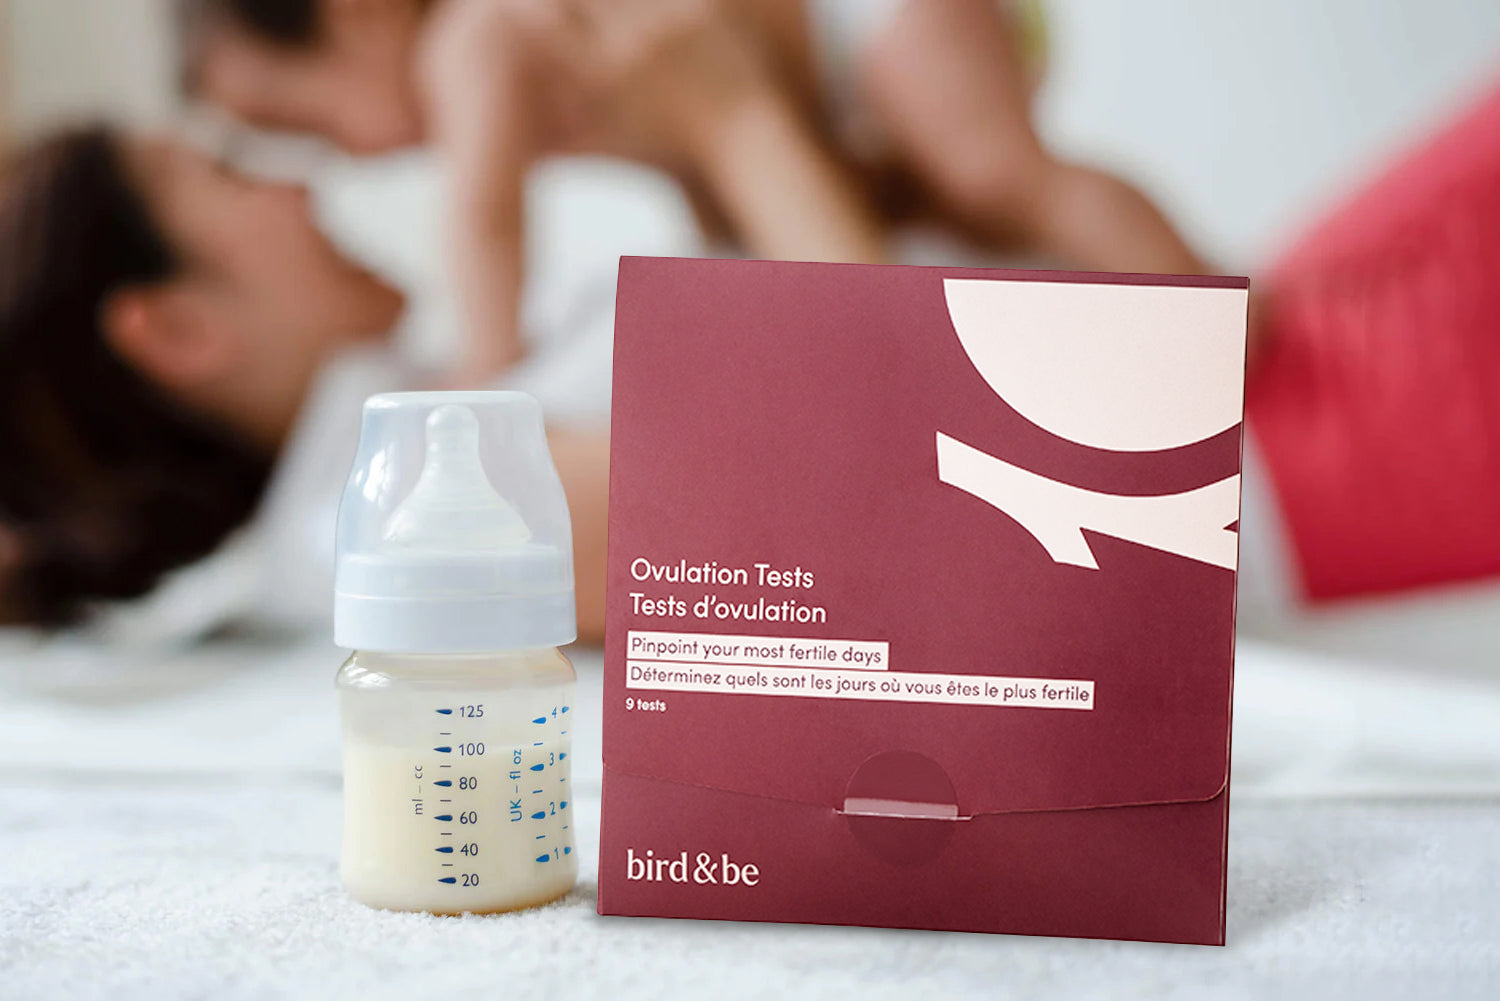 10 x Breastmilk Alcohol Test Strips Home Breast Milk Testing